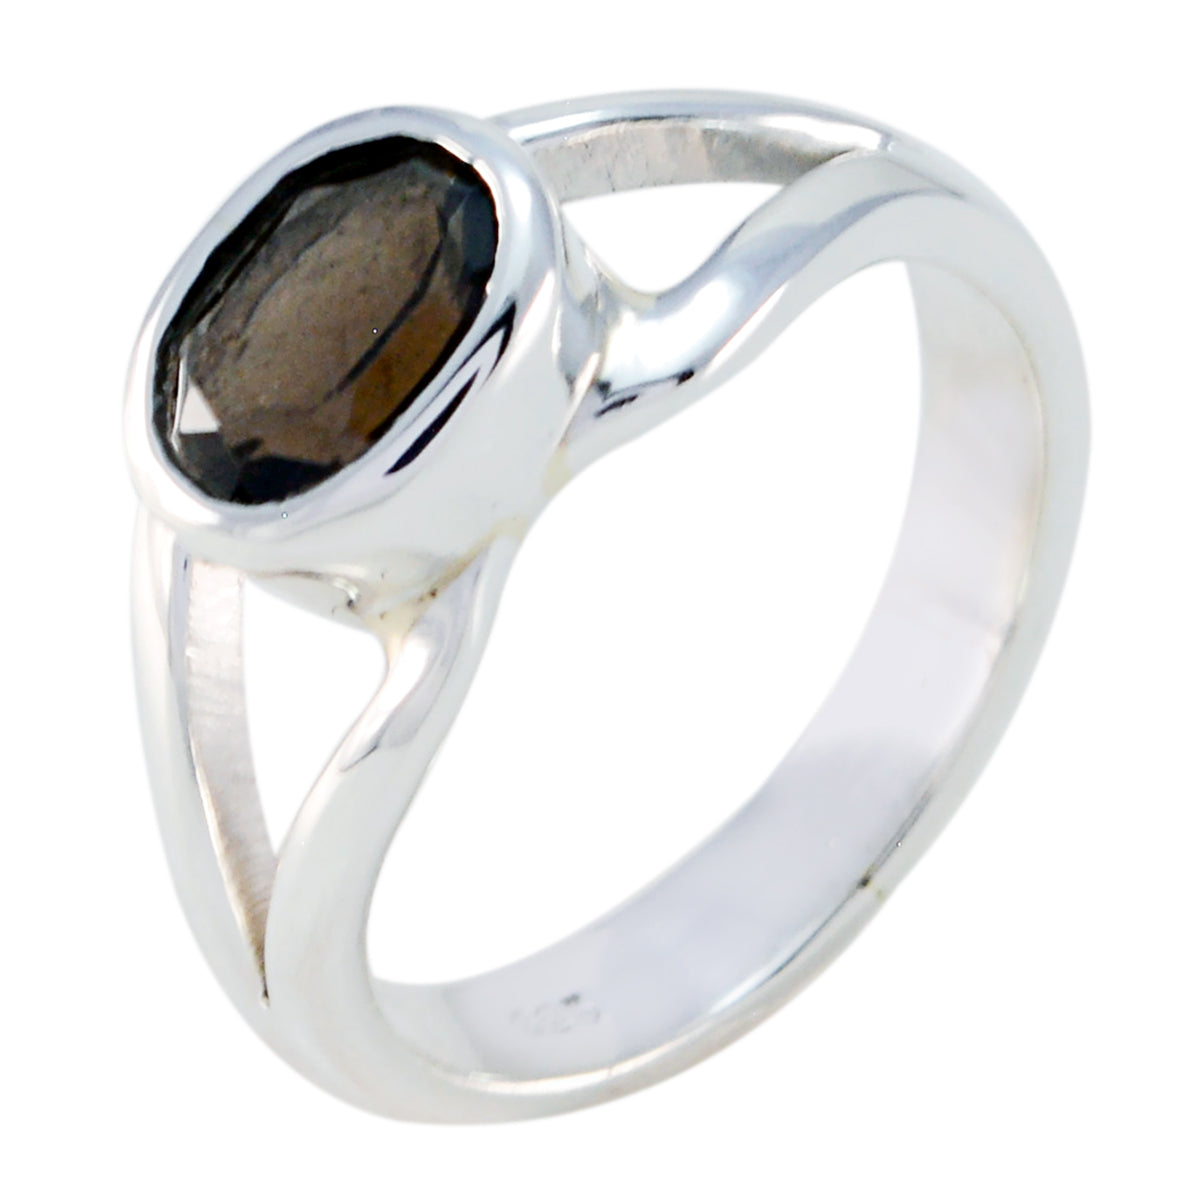 Bonny Gem Smoky Quartz Solid Silver Ring Jewelry Magnifying Glass